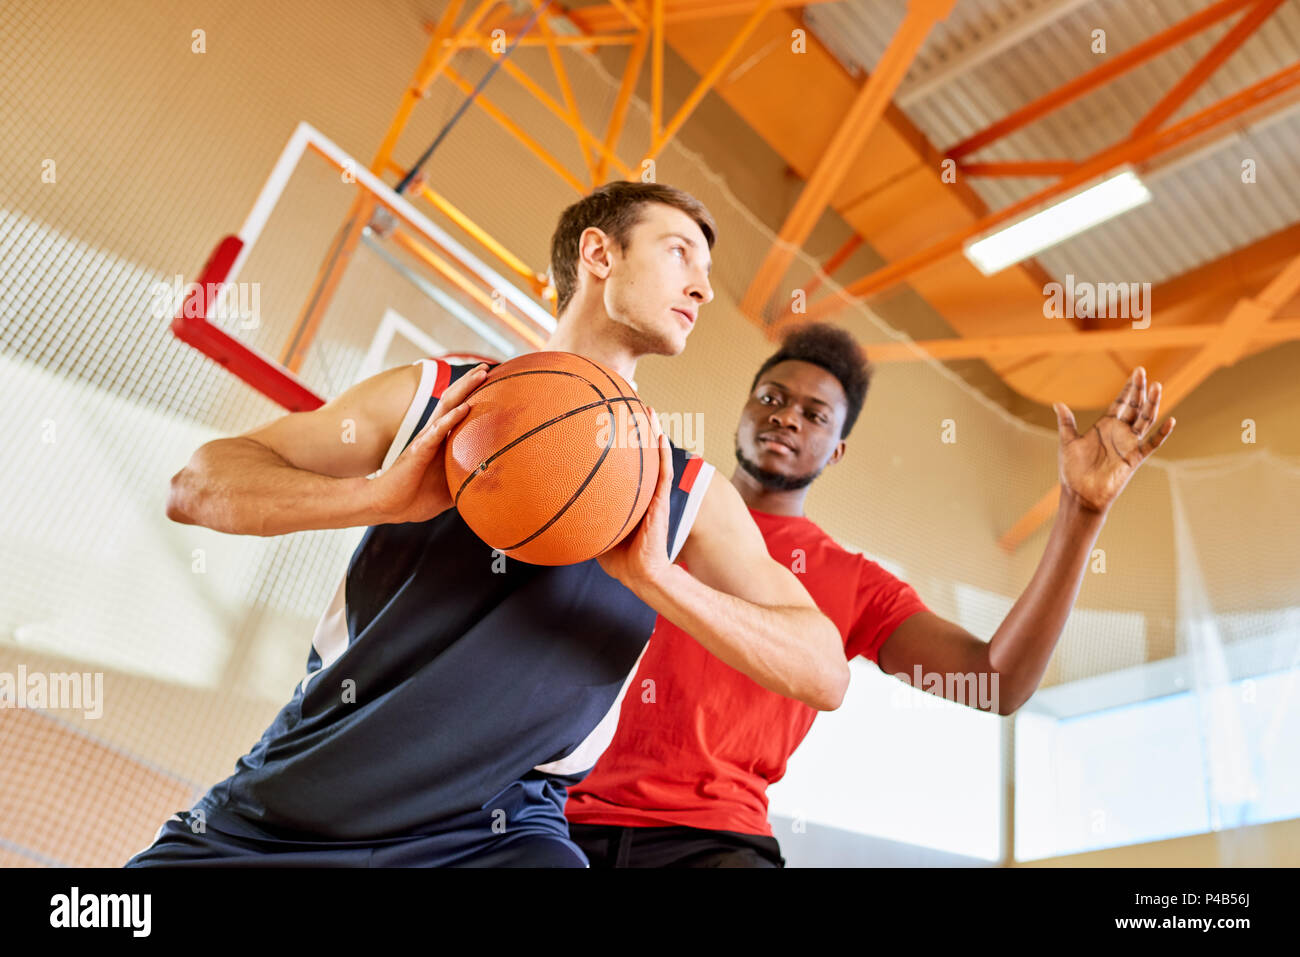 Two sportsmen playing basketball Stock Photo